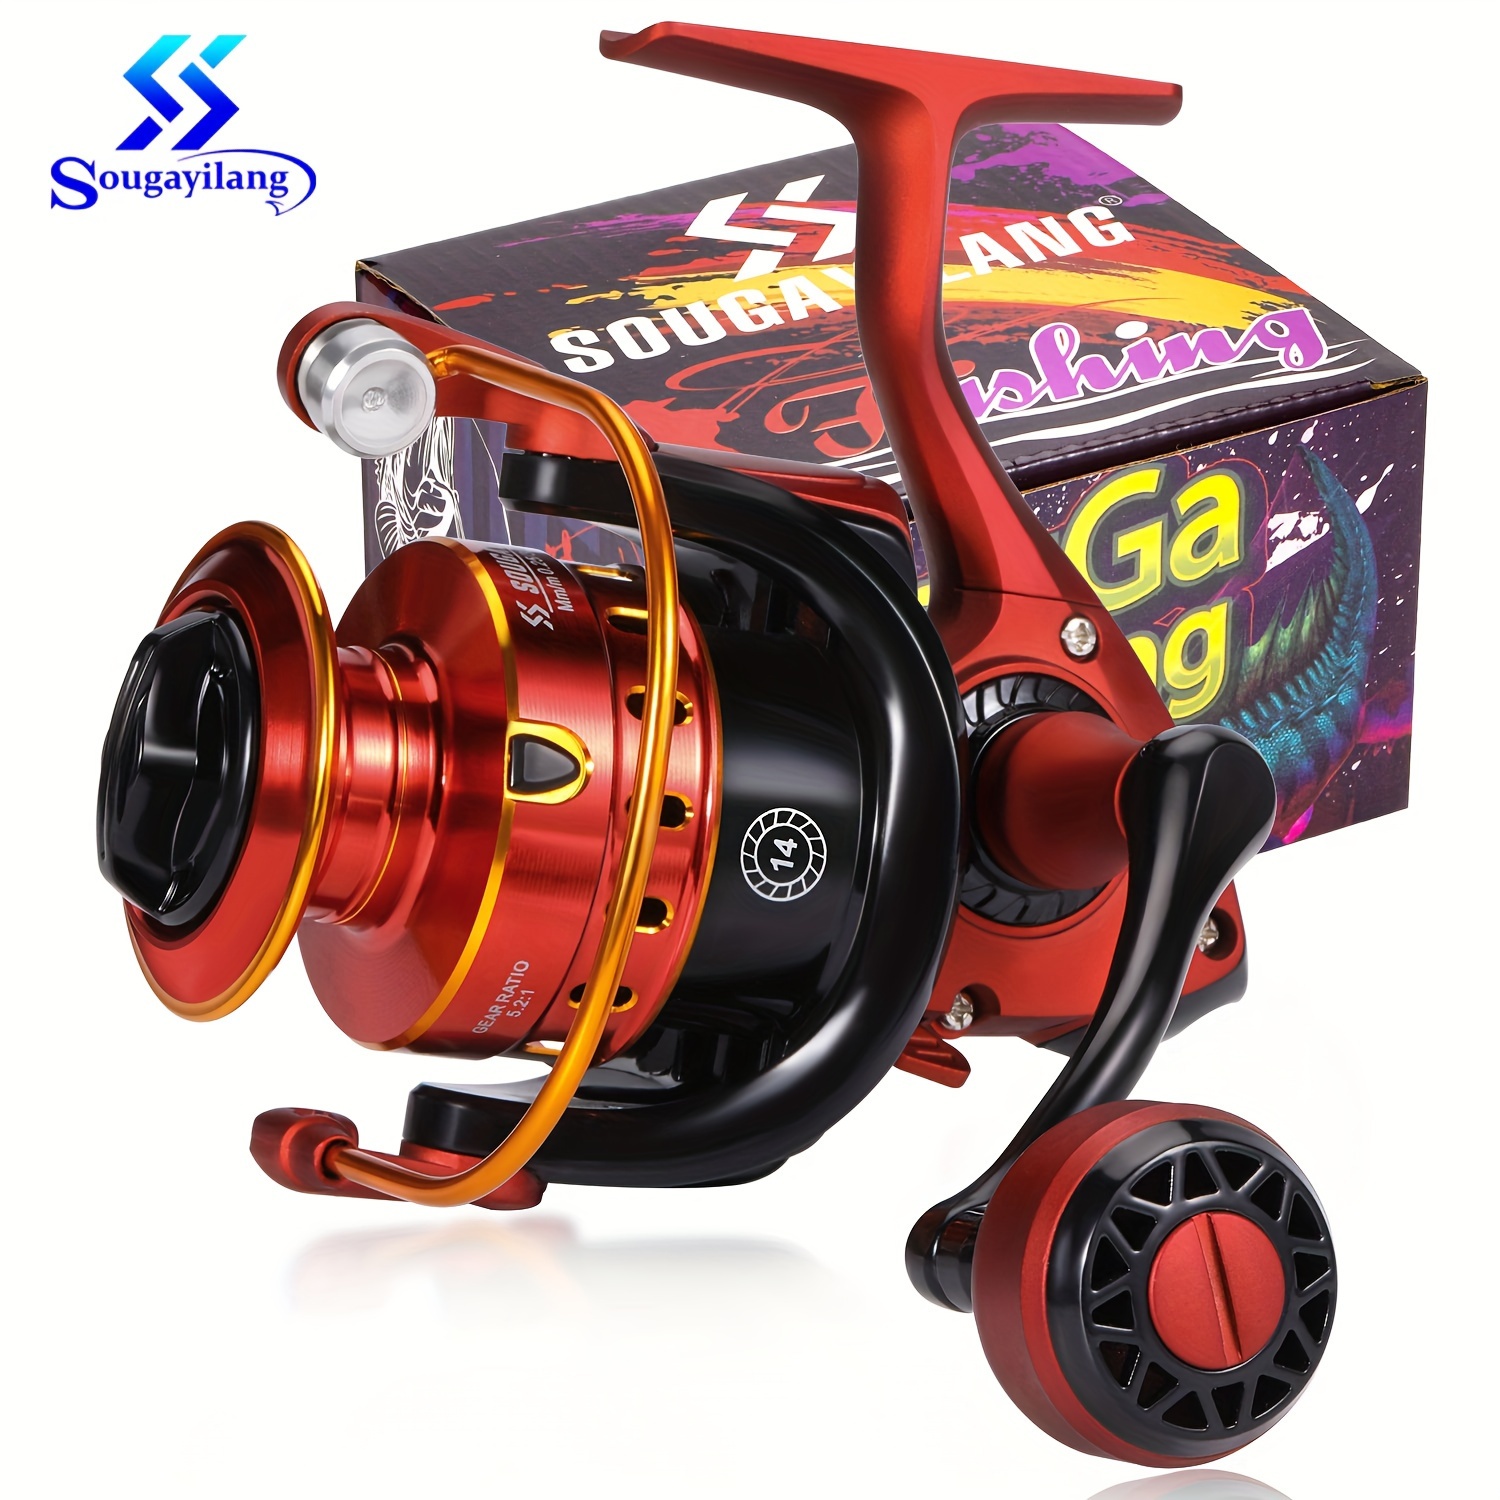 Sougayilang Fishing Reel 10000 Series 4.6:1 Gear Ratio Spinning Reel Max  Drag 25Kg with Metal Body Smooth Carp Reels Pesca